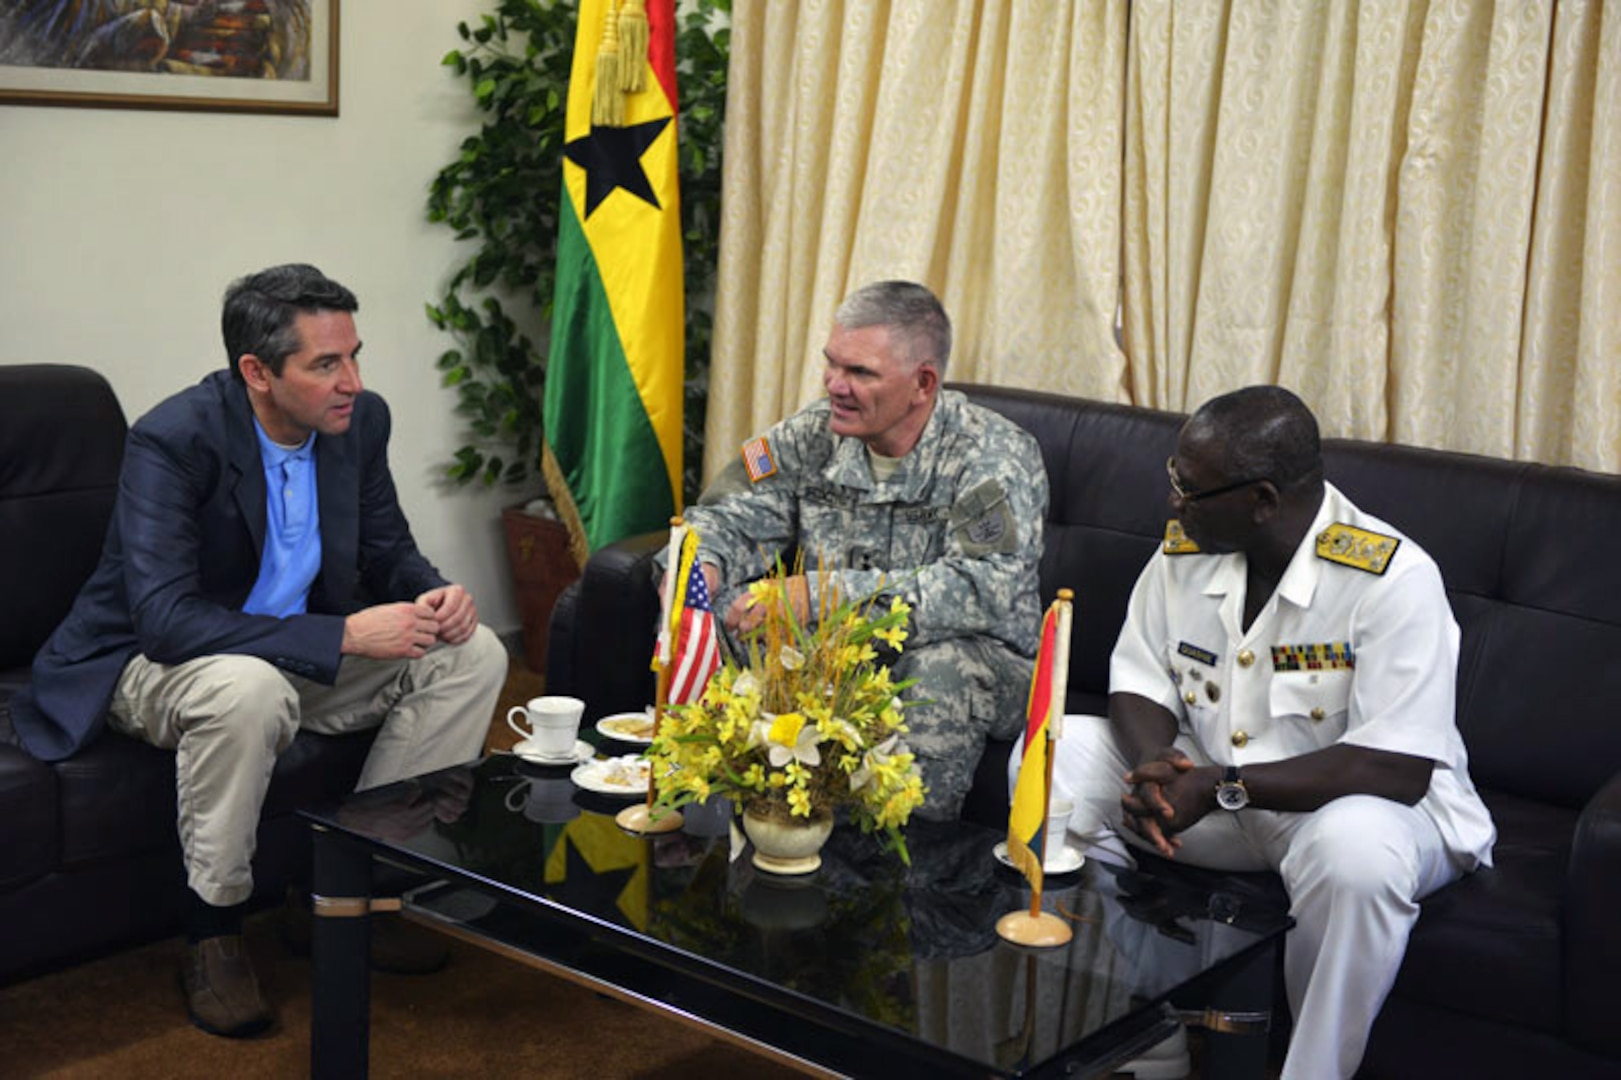 North Dakota Lt. Gov. Drew Wrigley and Maj. Gen. David Sprynczynatyk, adjutant general for the North Dakota National Guard, meet with Adm. Mathew Quashie, Chief of the Defence Staff, Ghana Armed Forces, at Burma Camp, Accra, Ghana on Jan. 8, 2014.